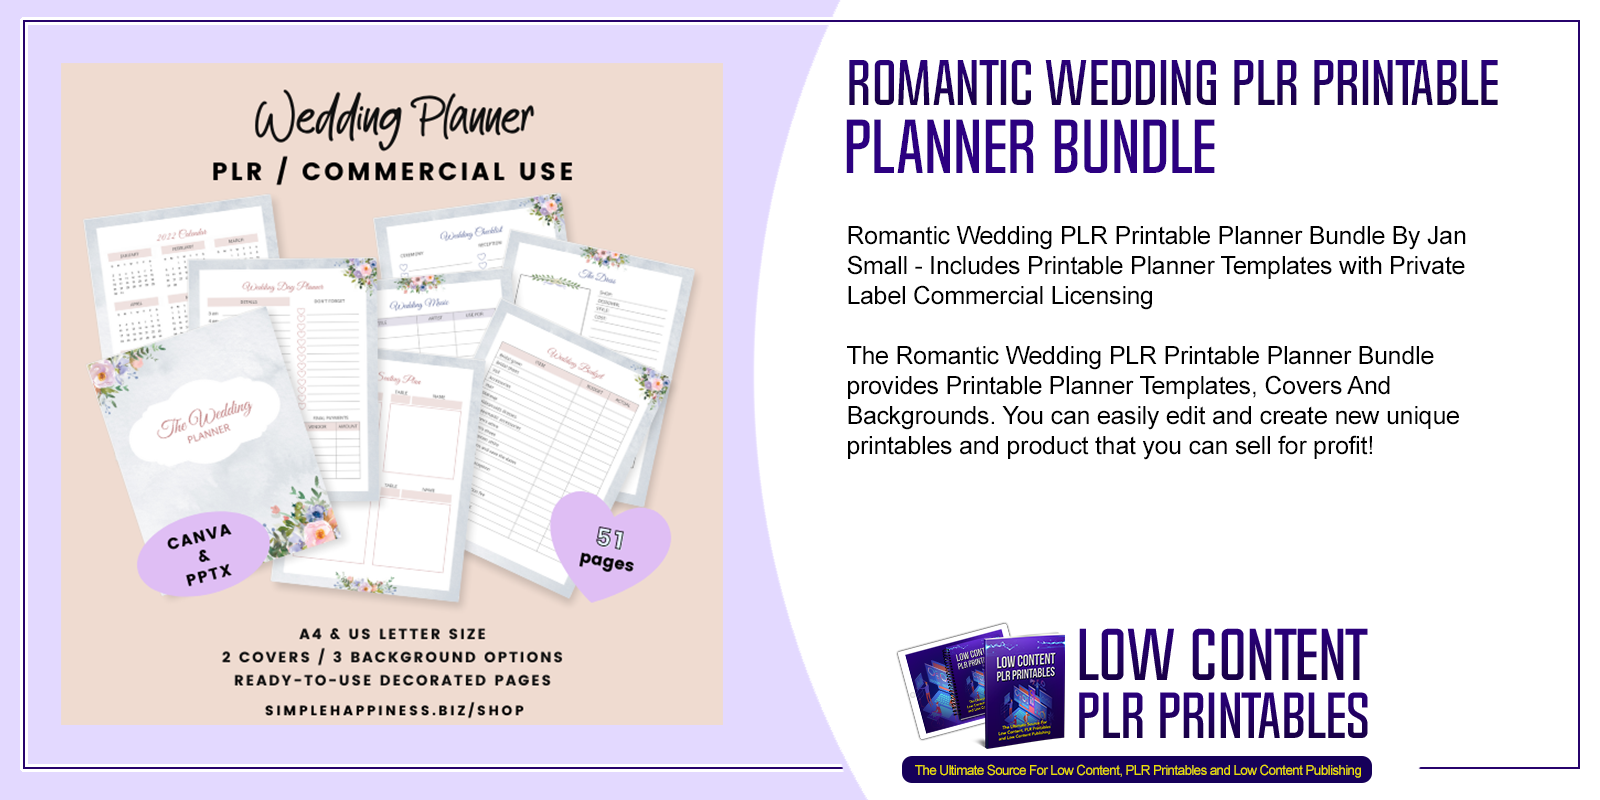 Romantic Wedding PLR Printable Planner Bundle